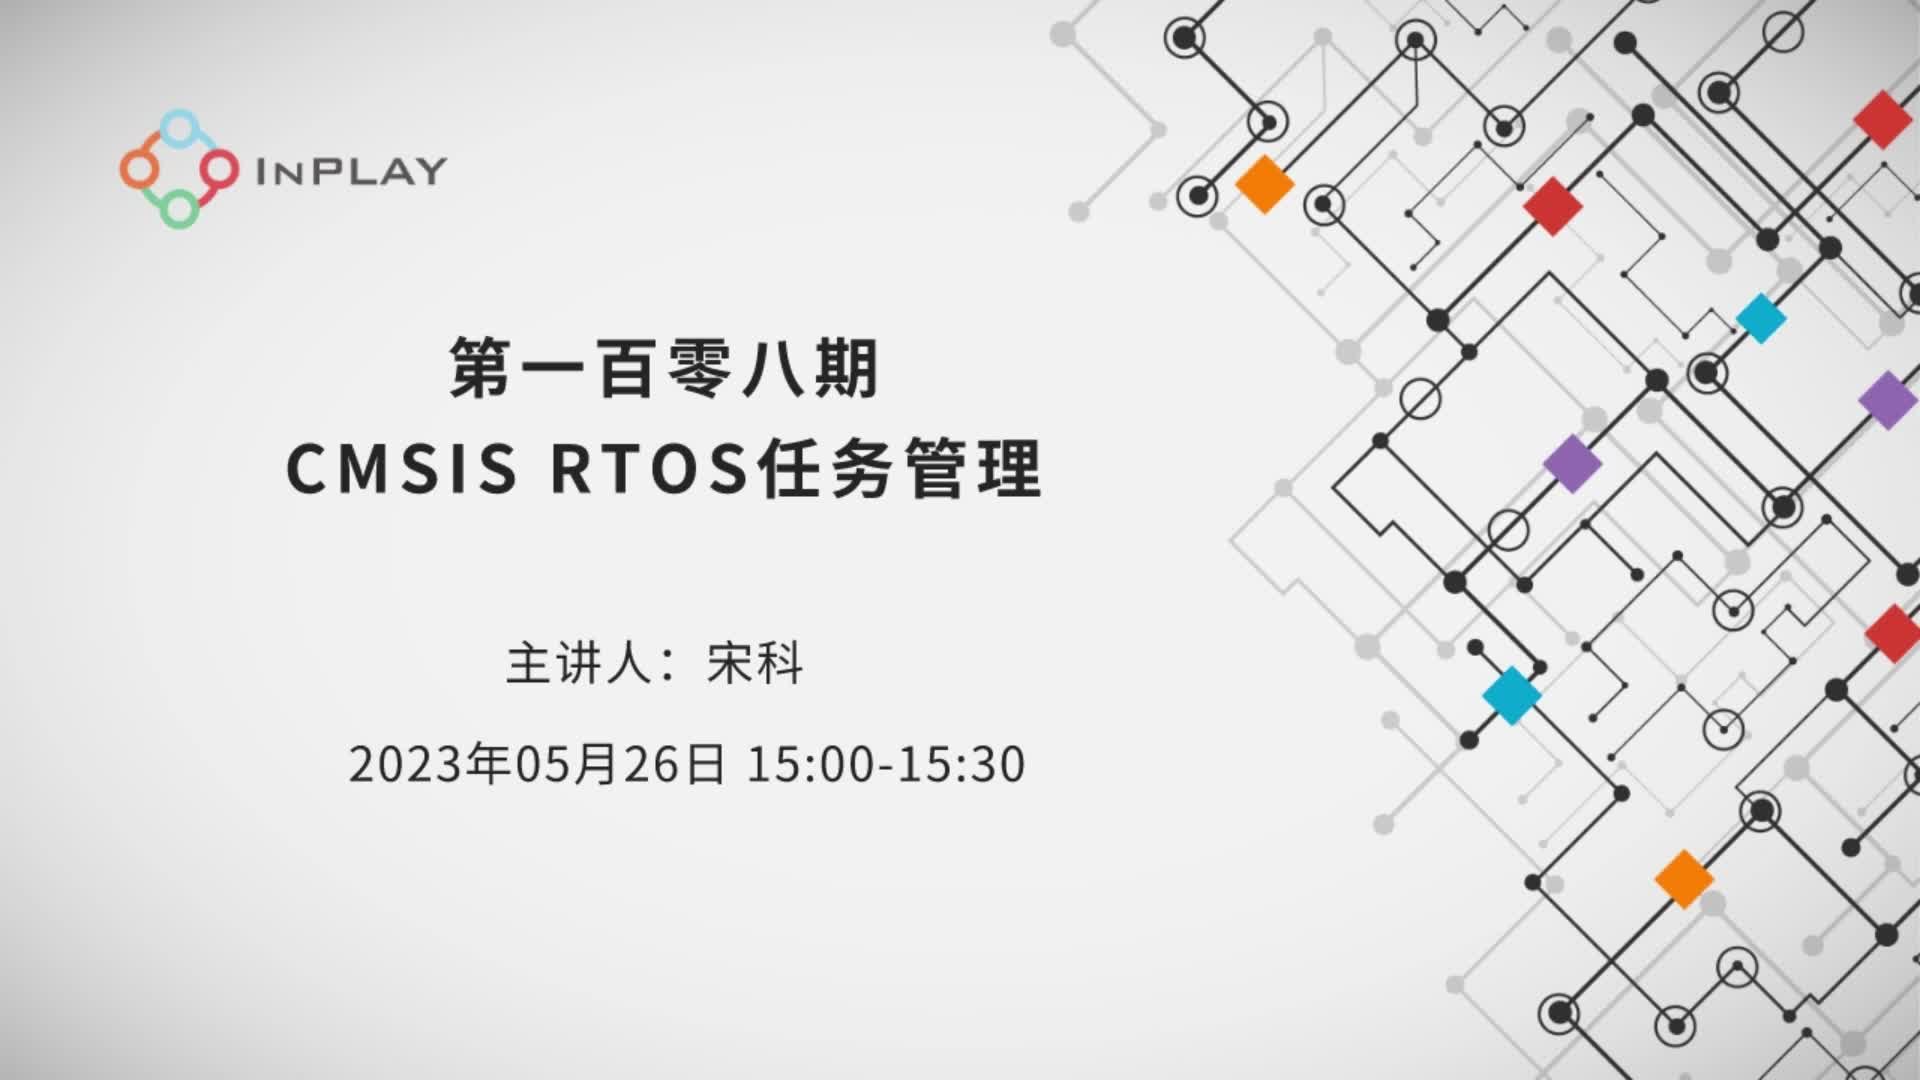 CMSIS RTOS任务管理